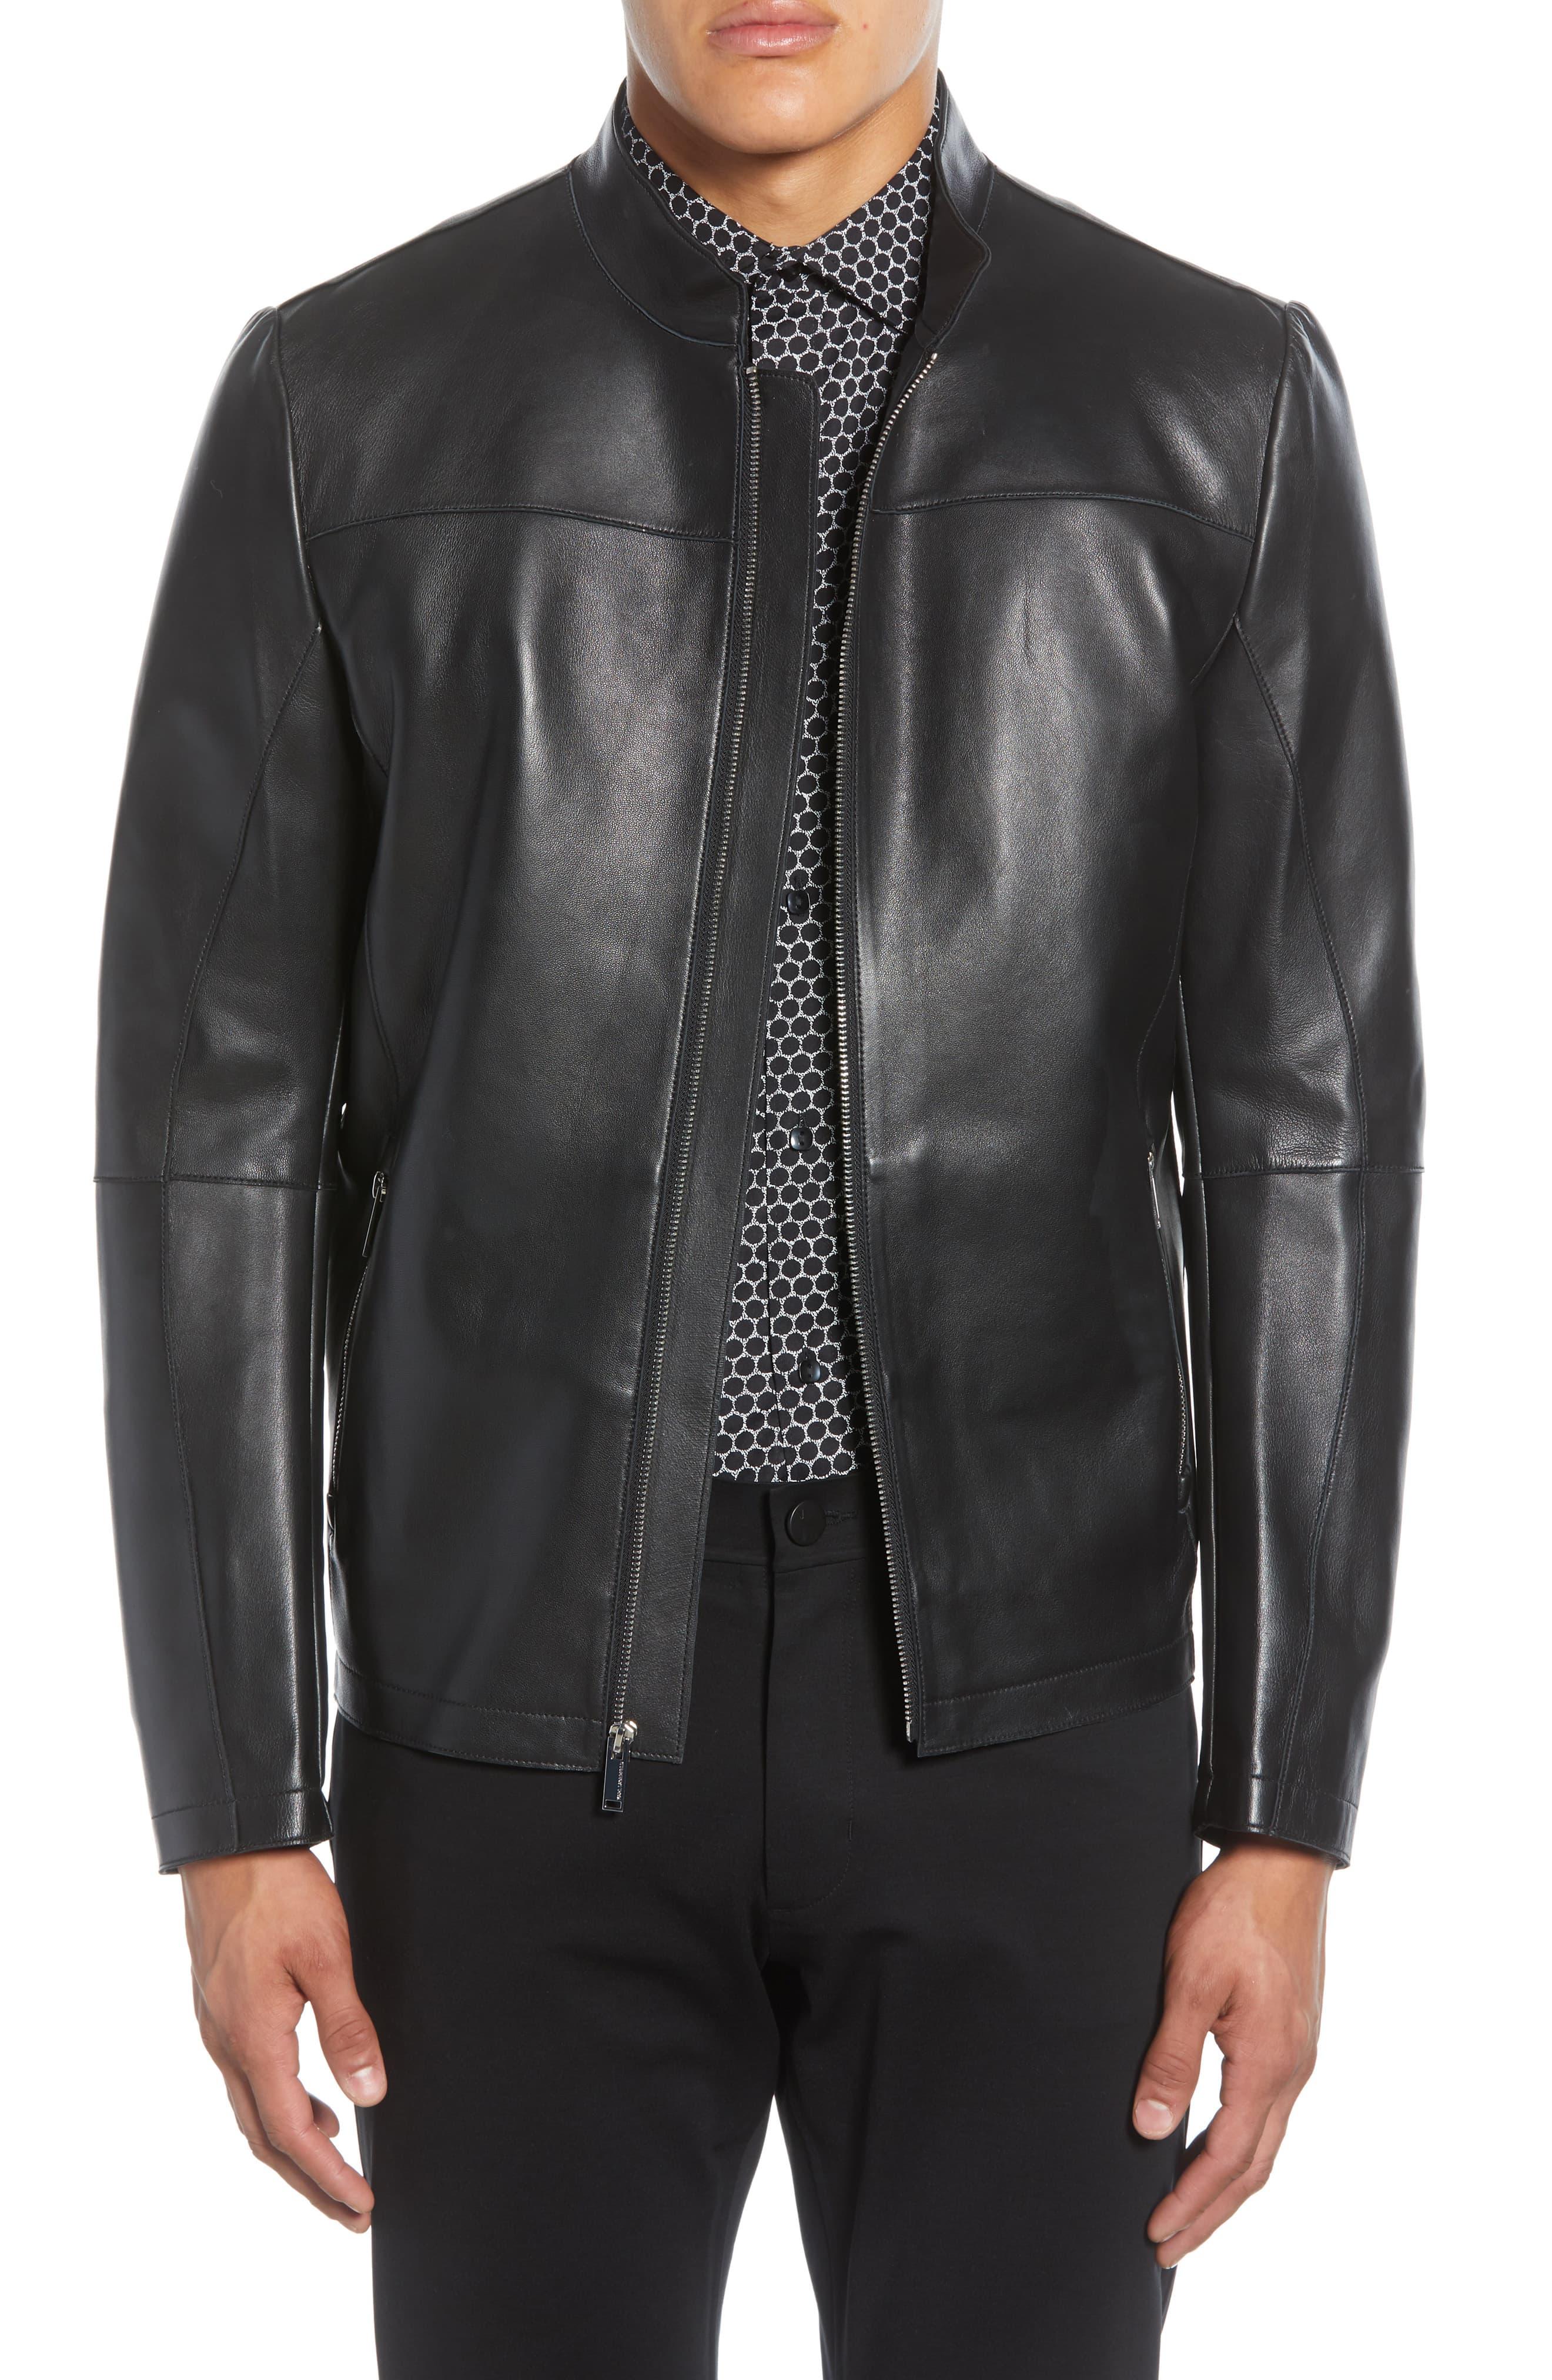 Karl Lagerfeld Bonded Leather Racing Jacket in Black for Men - Lyst